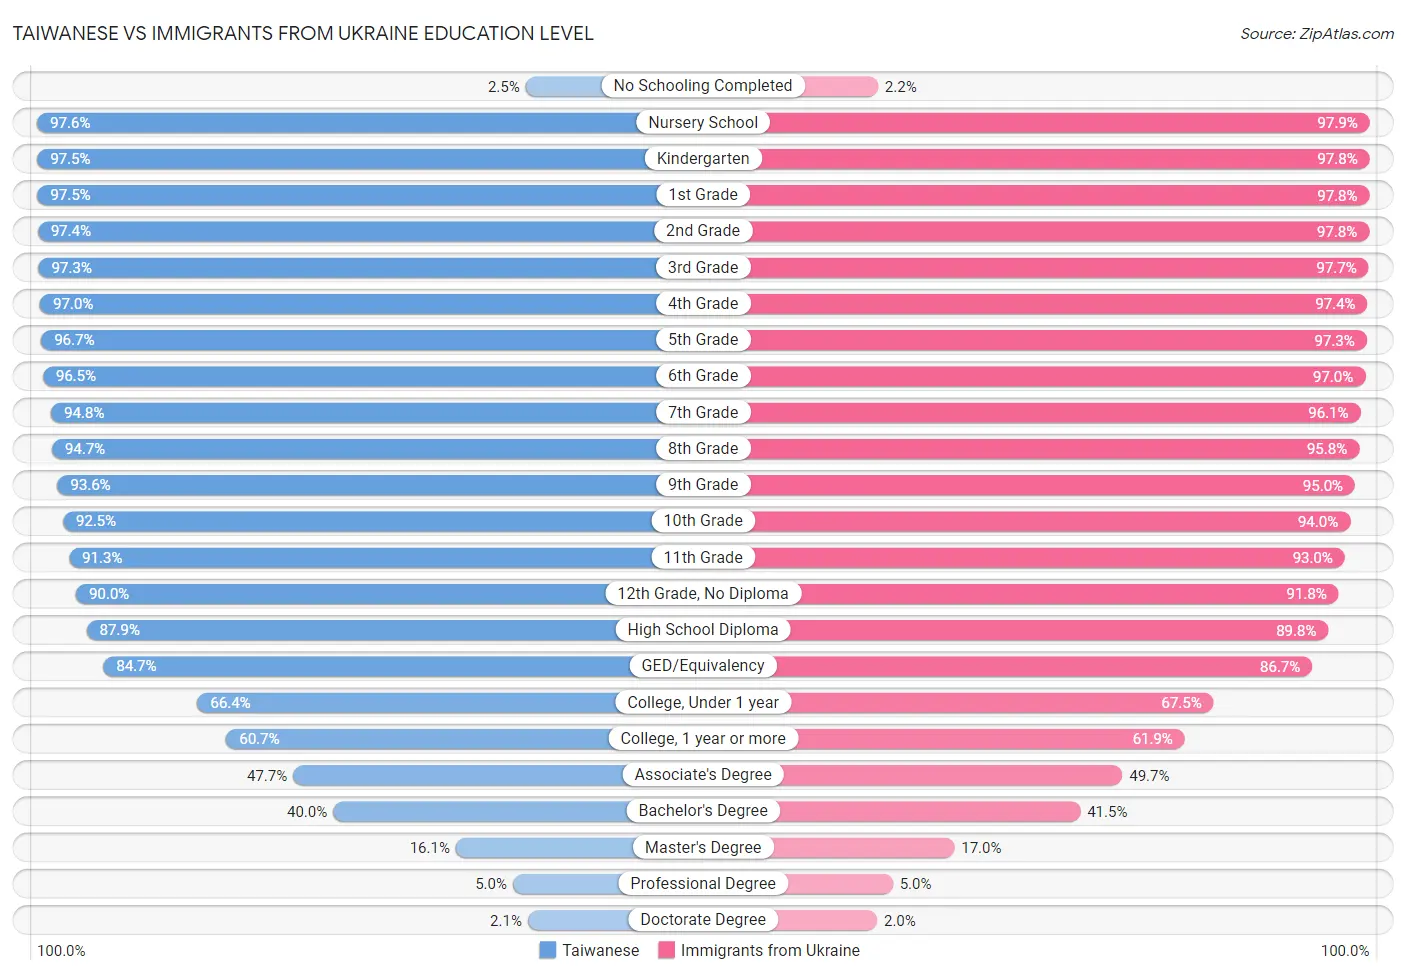 Taiwanese vs Immigrants from Ukraine Education Level